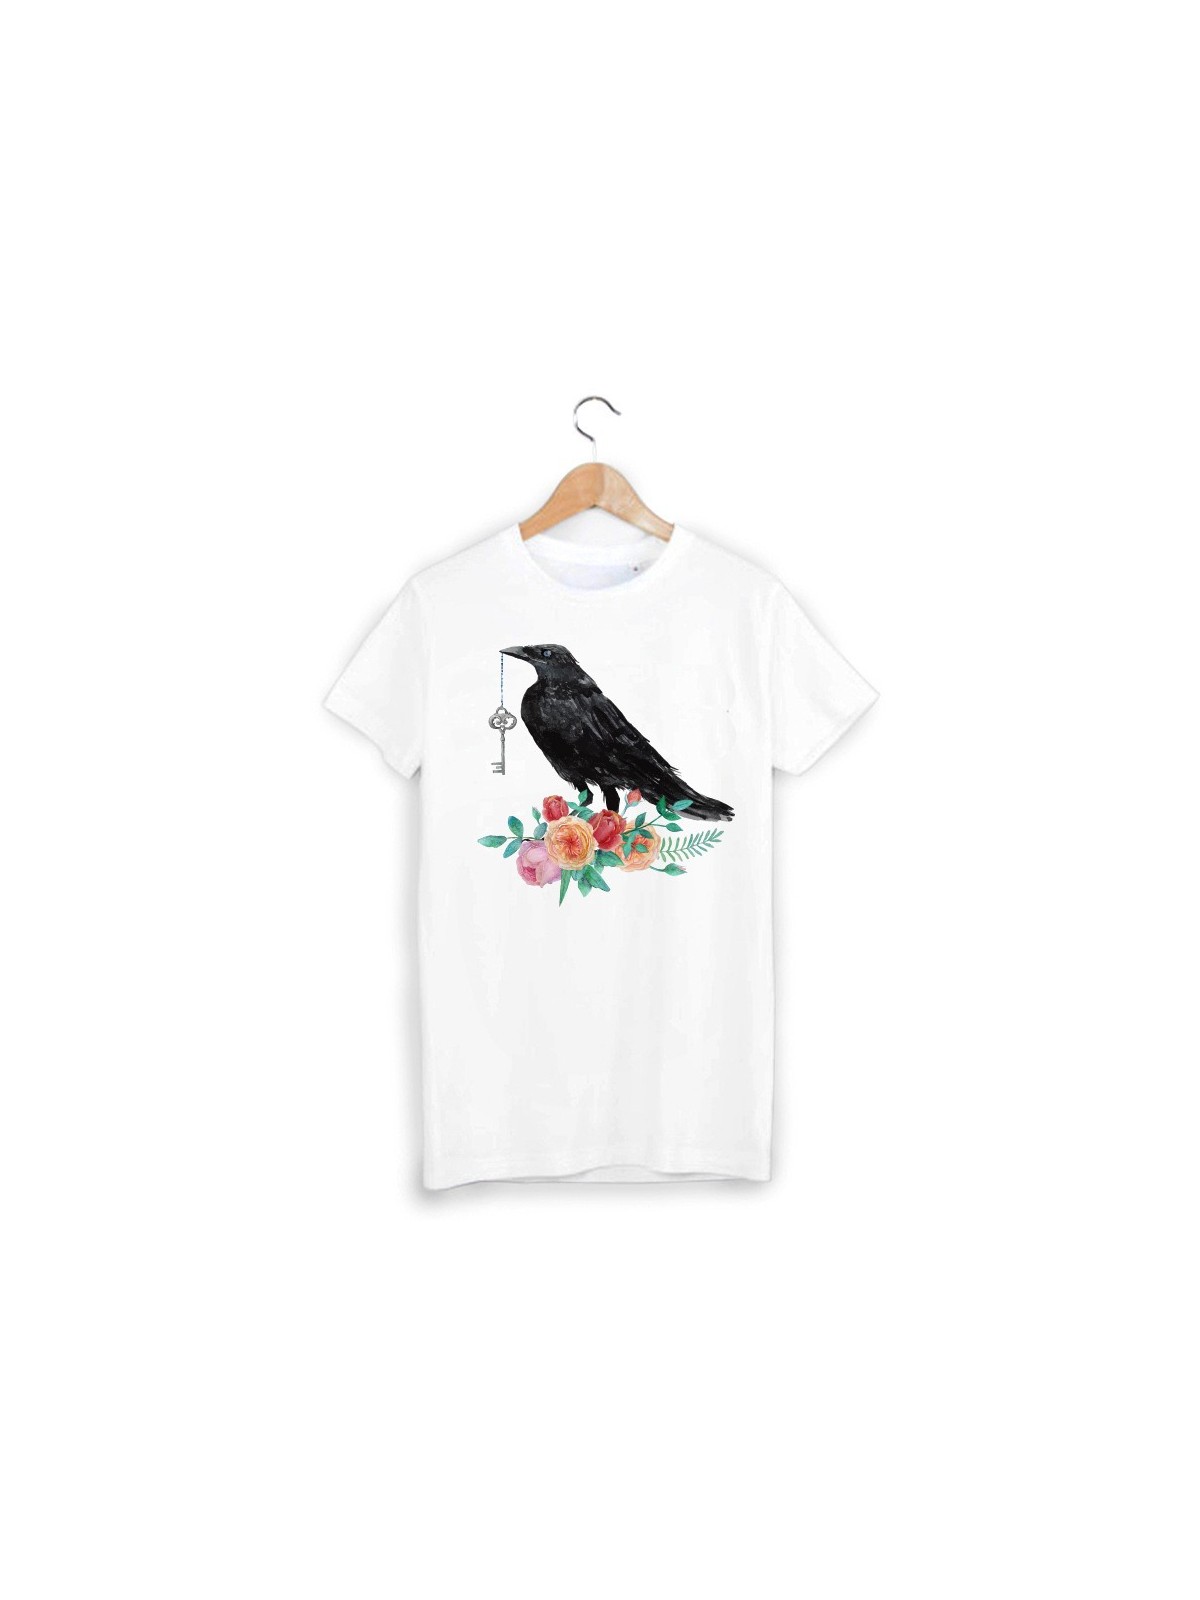 T-Shirt illustrÃ© corbeau ref 1421